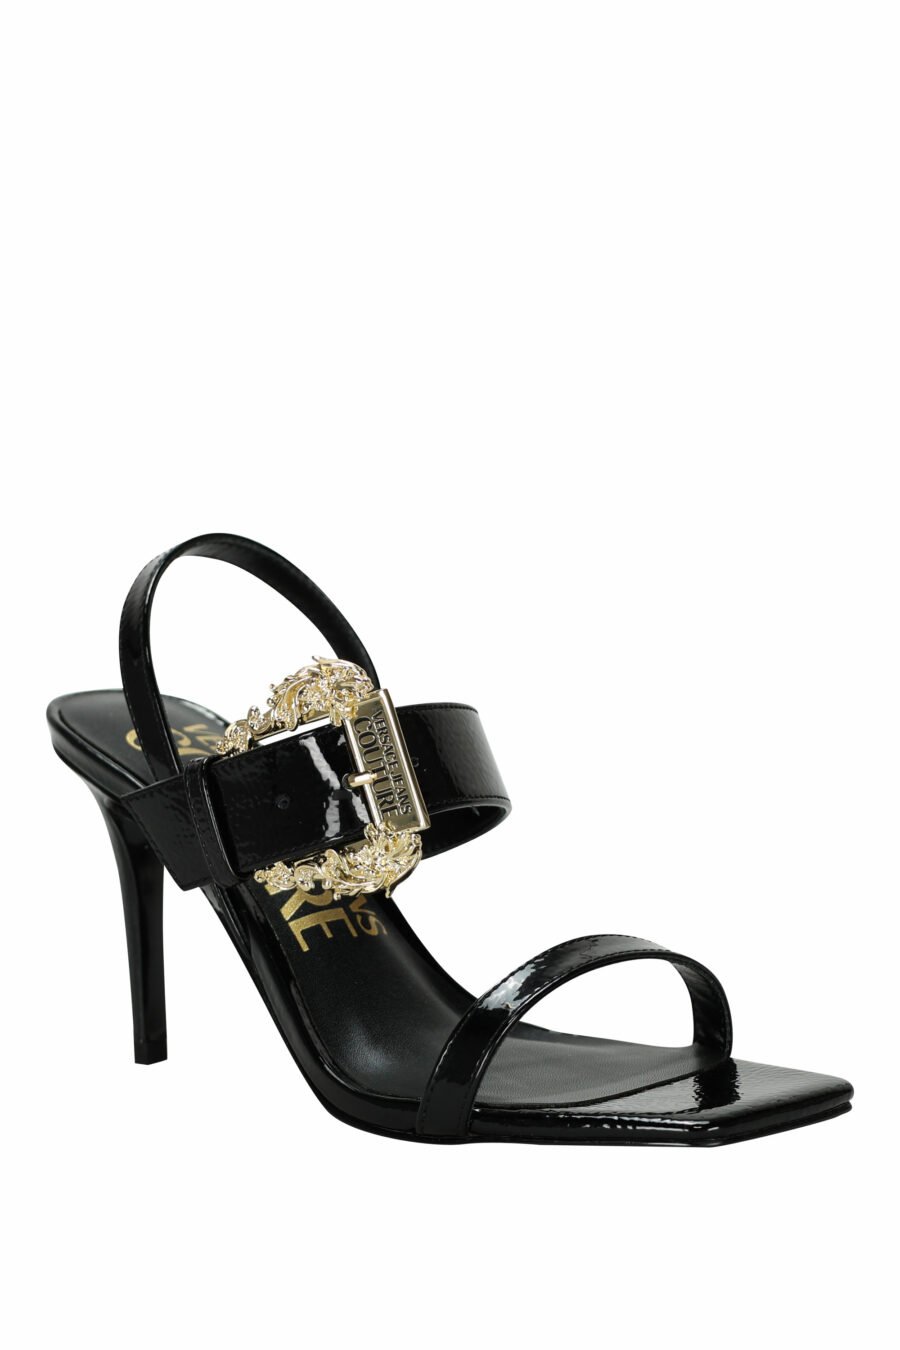 Black stiletto heels with gold baroque buckle - 8052019607789 1